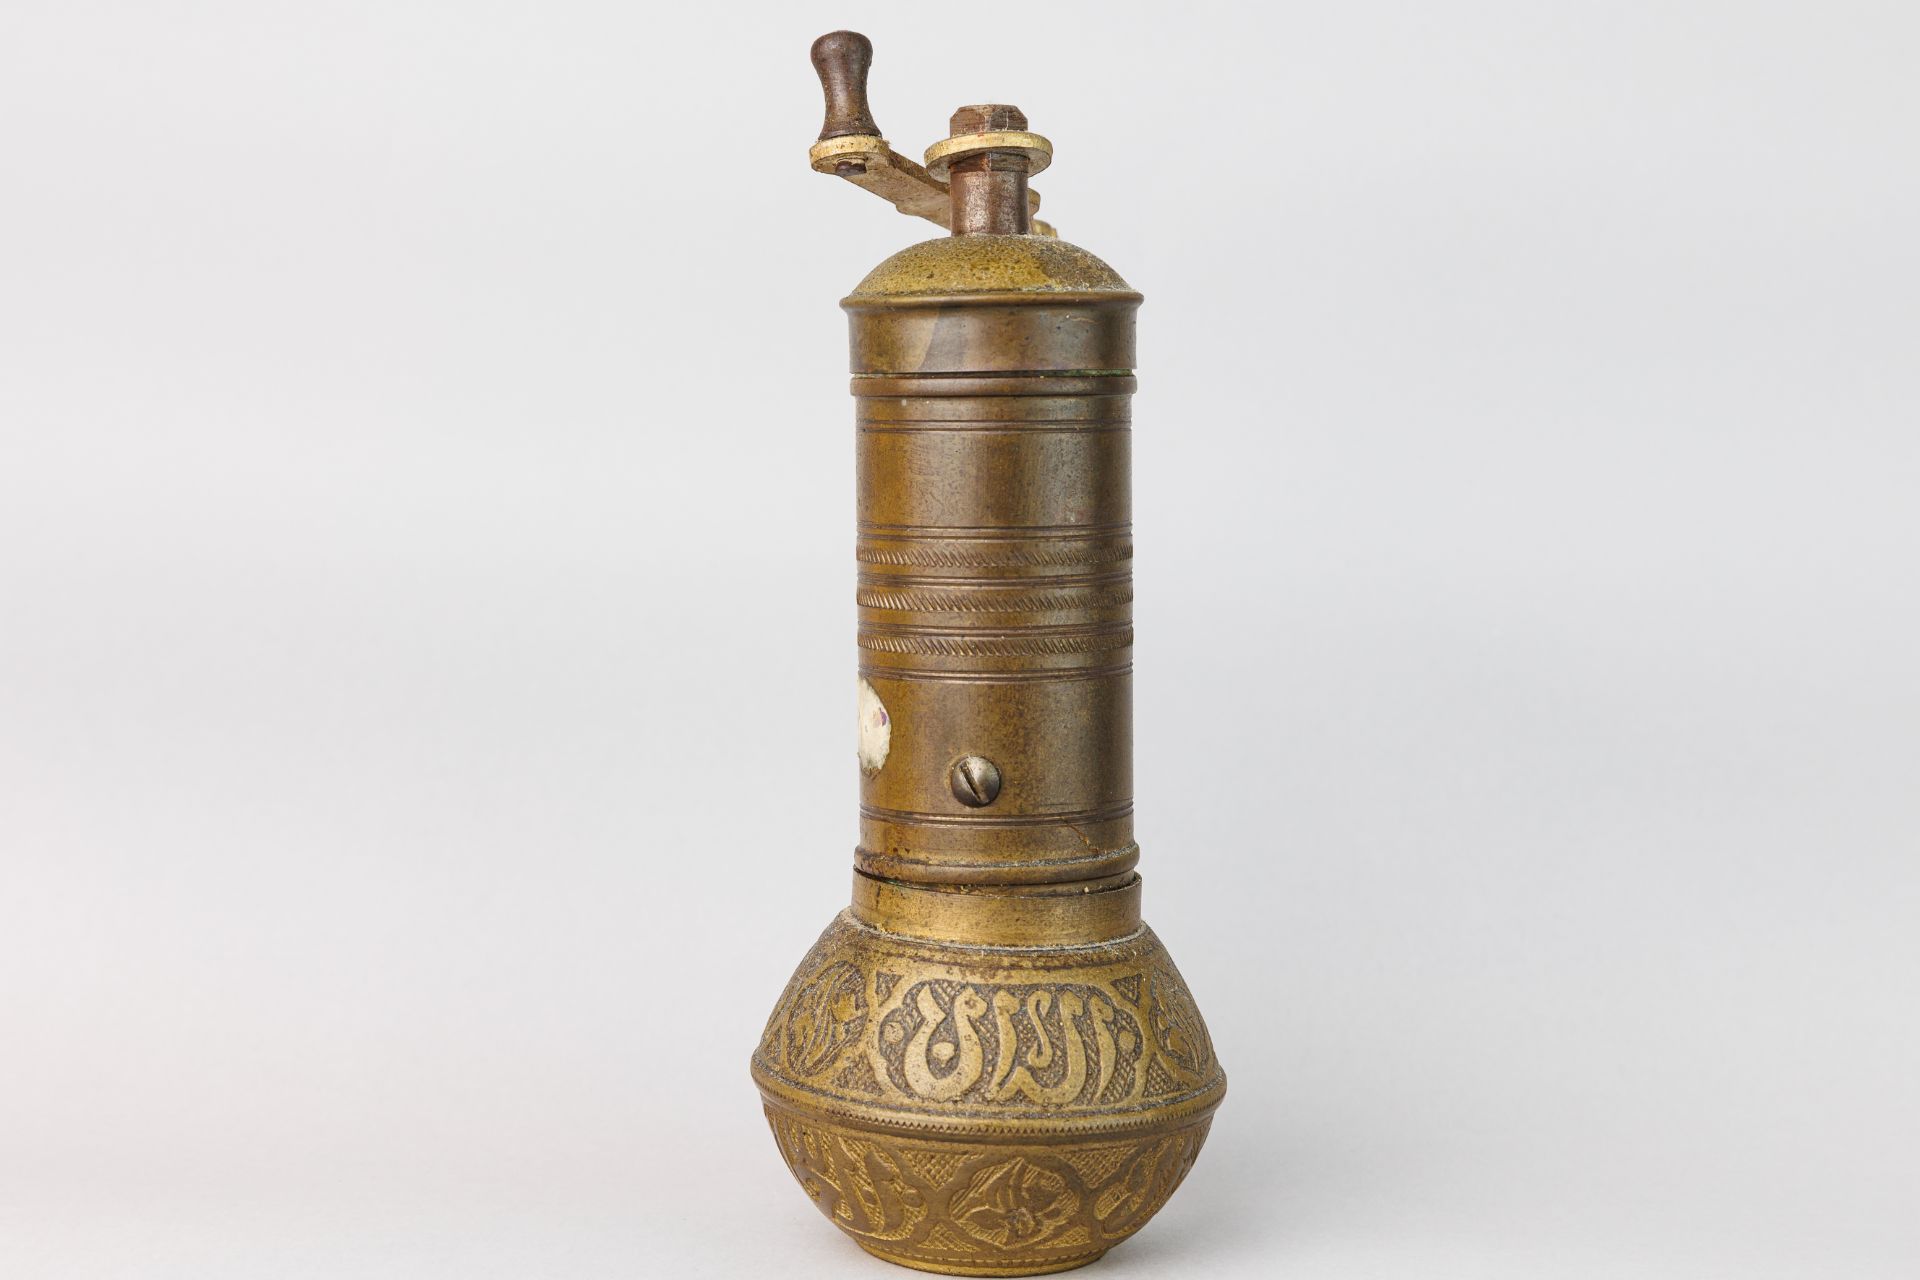 Antique manual bronze coffee grinder